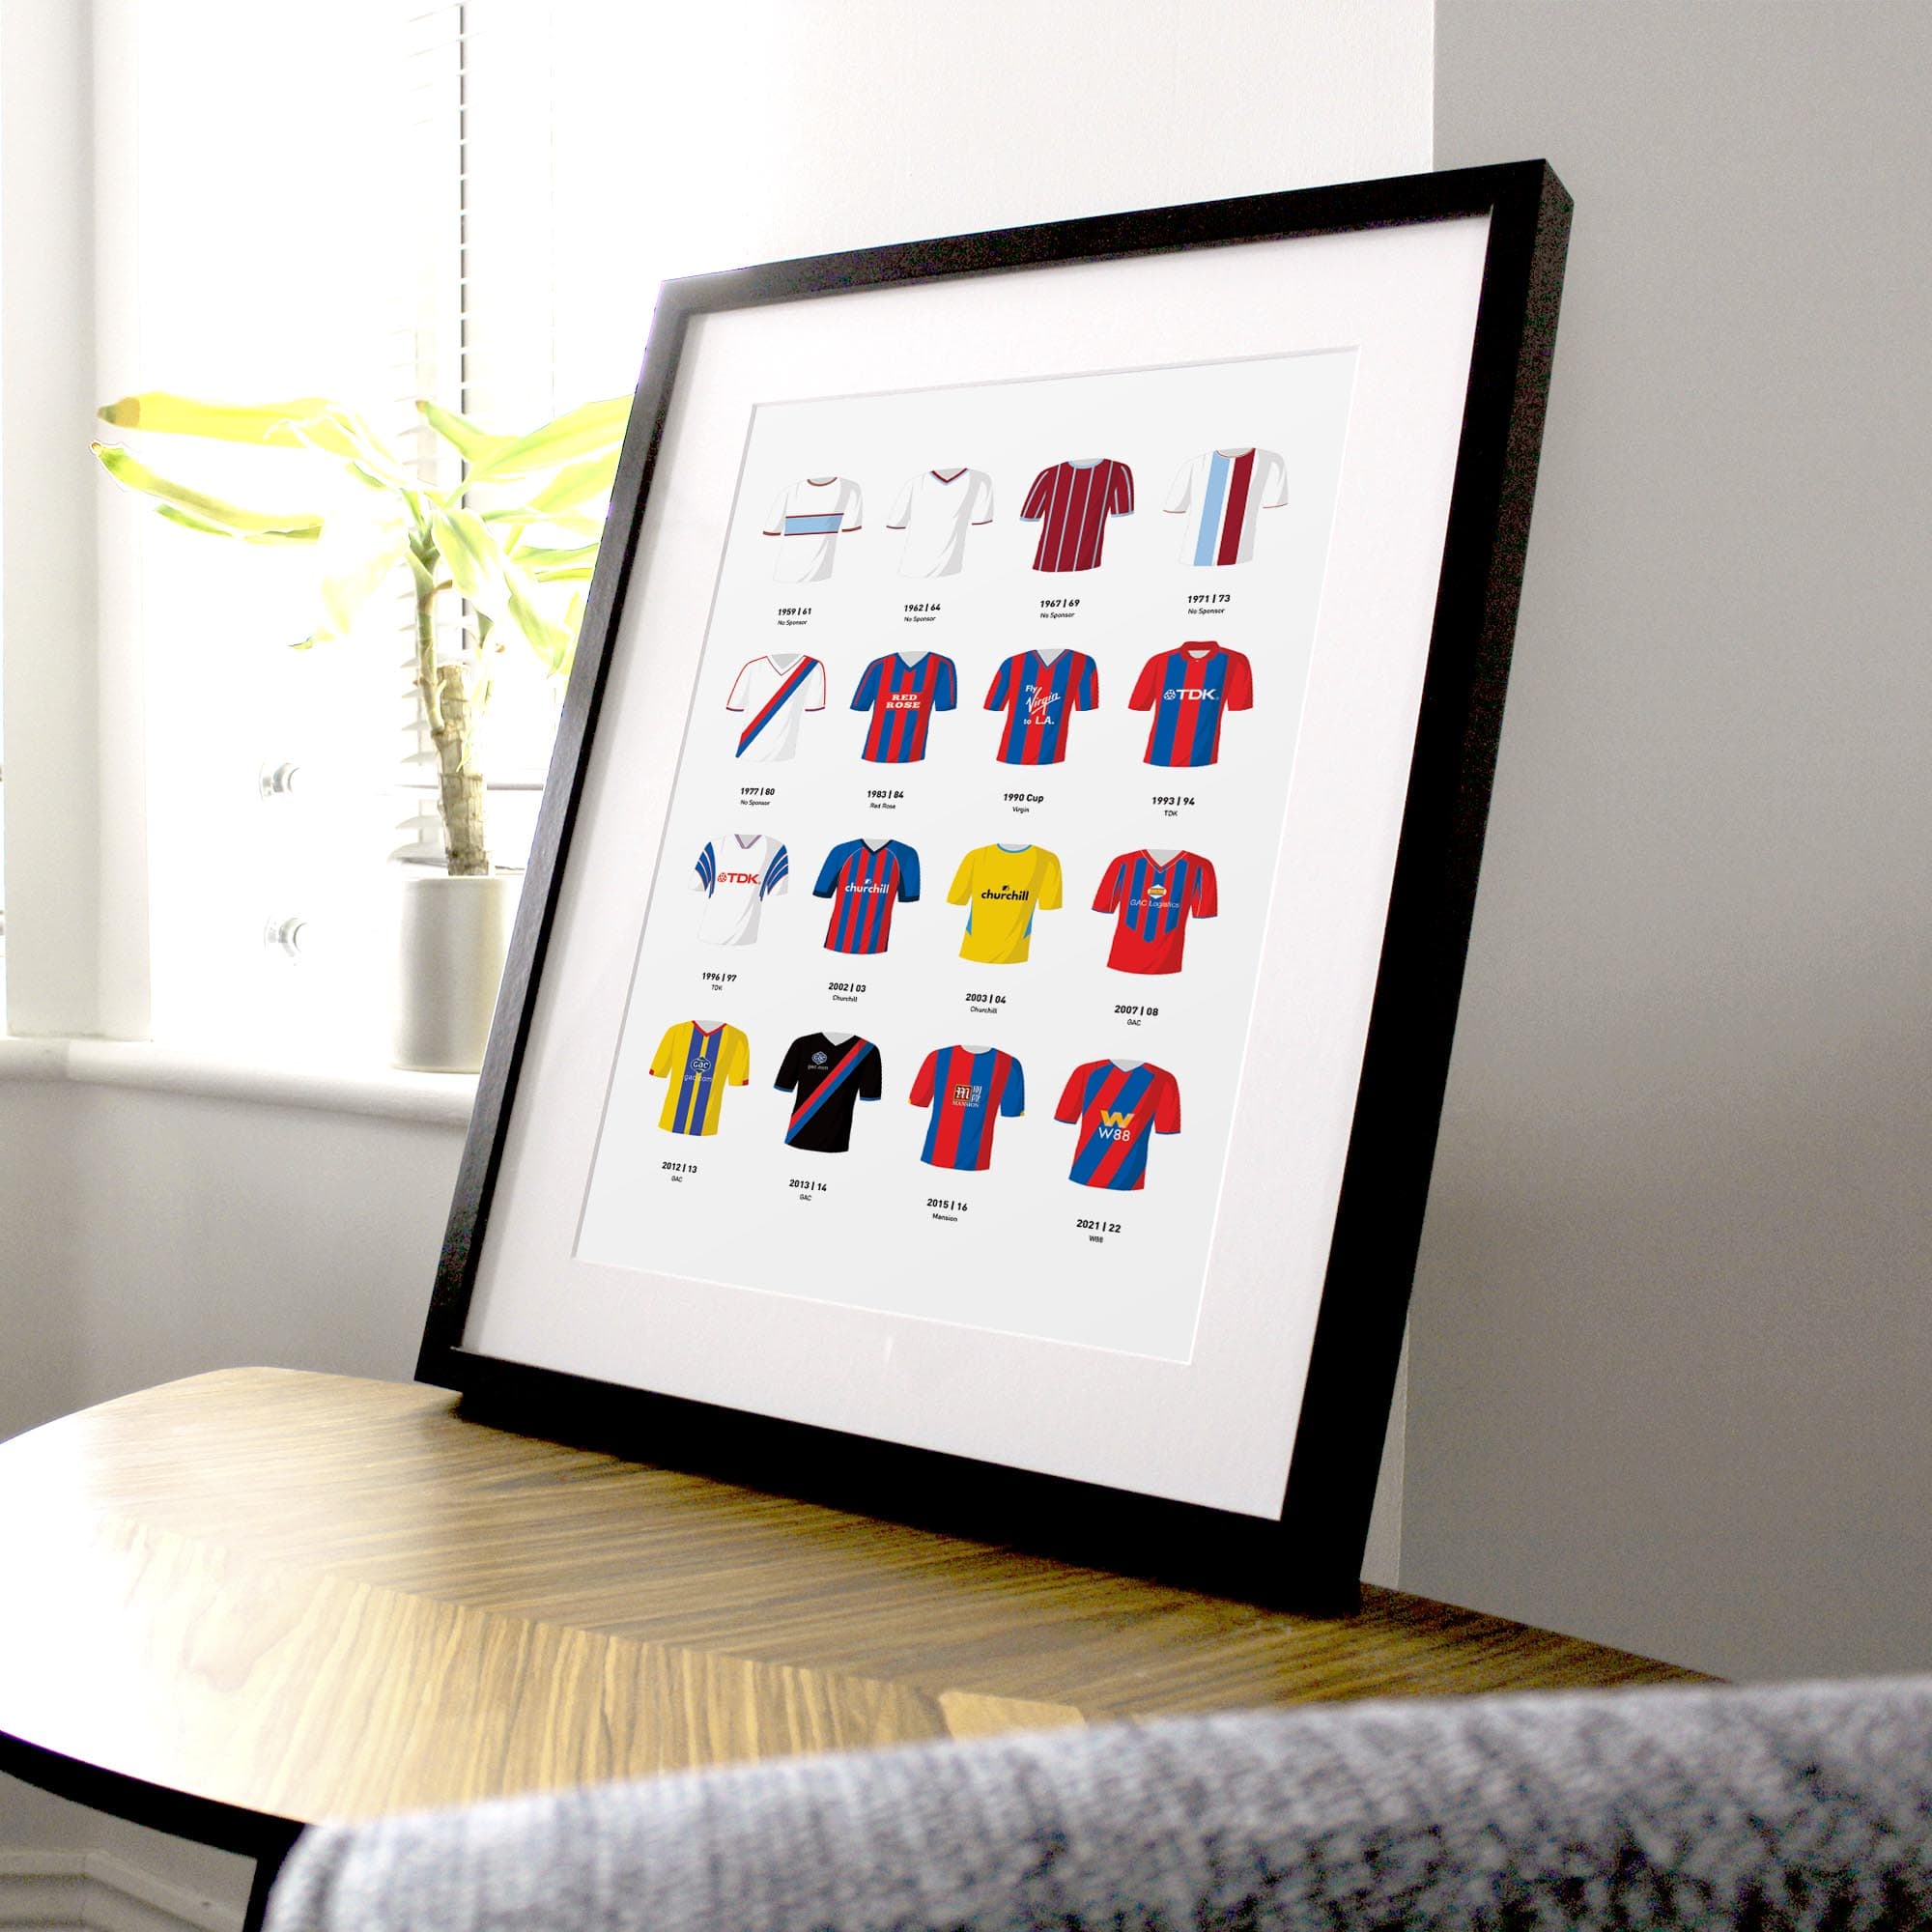 Palace Classic Kits Football Team Print Good Team On Paper